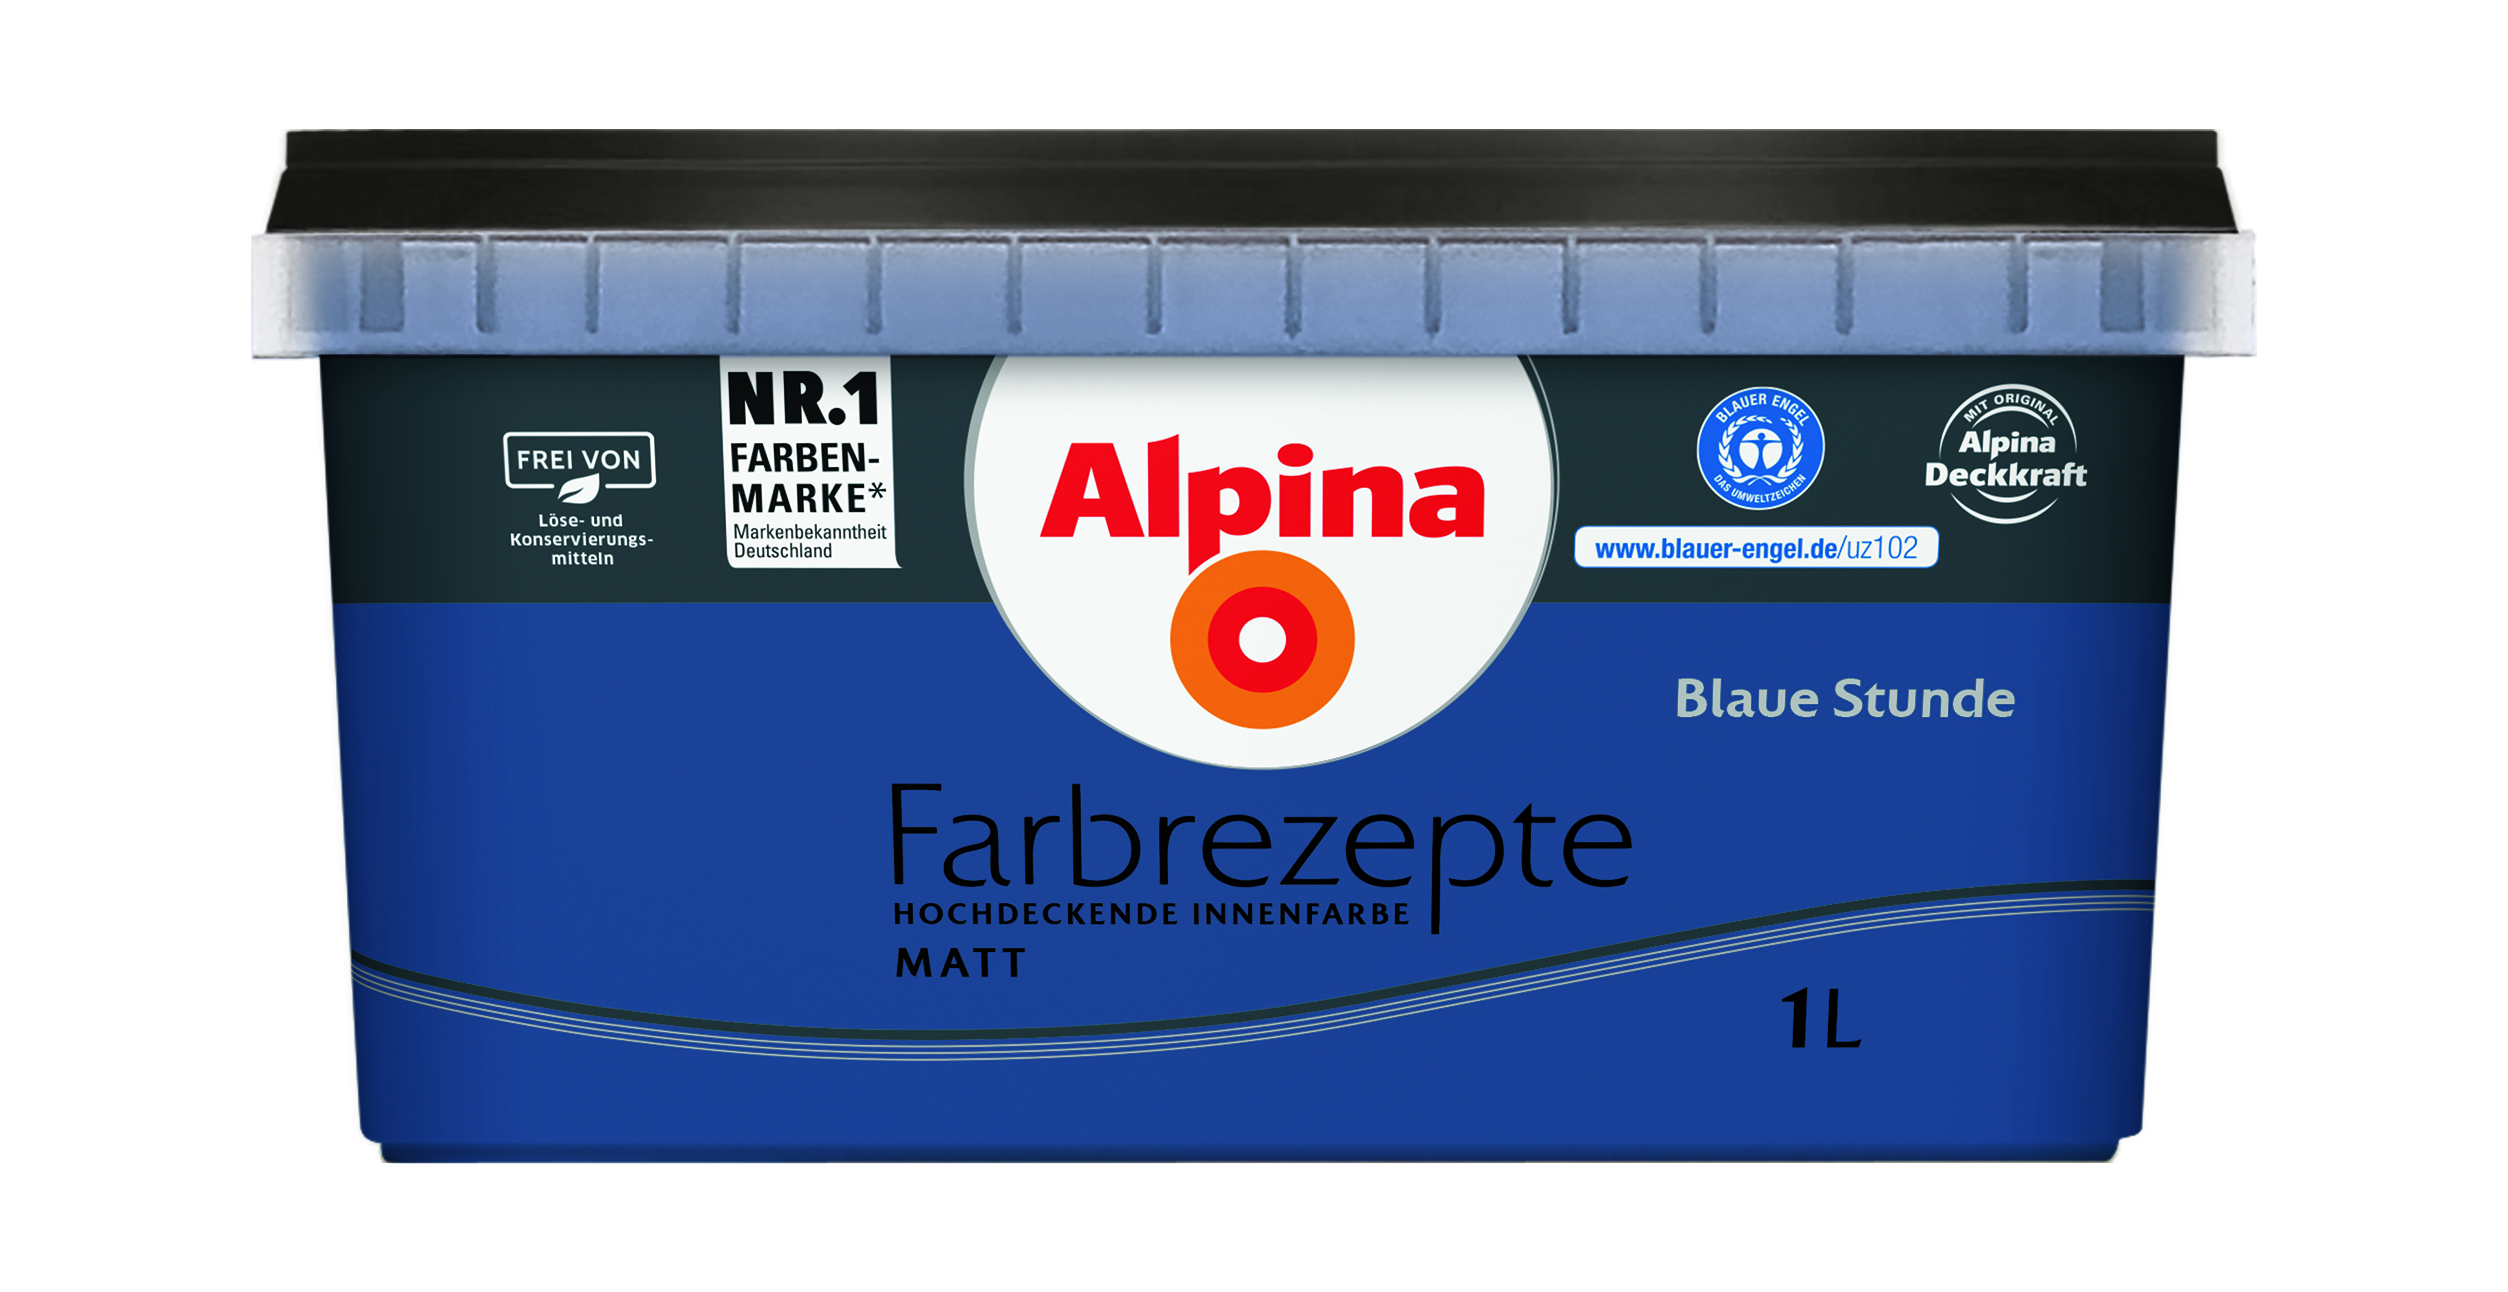 Alpina Farbrezepte Blaue Stunde, 1L